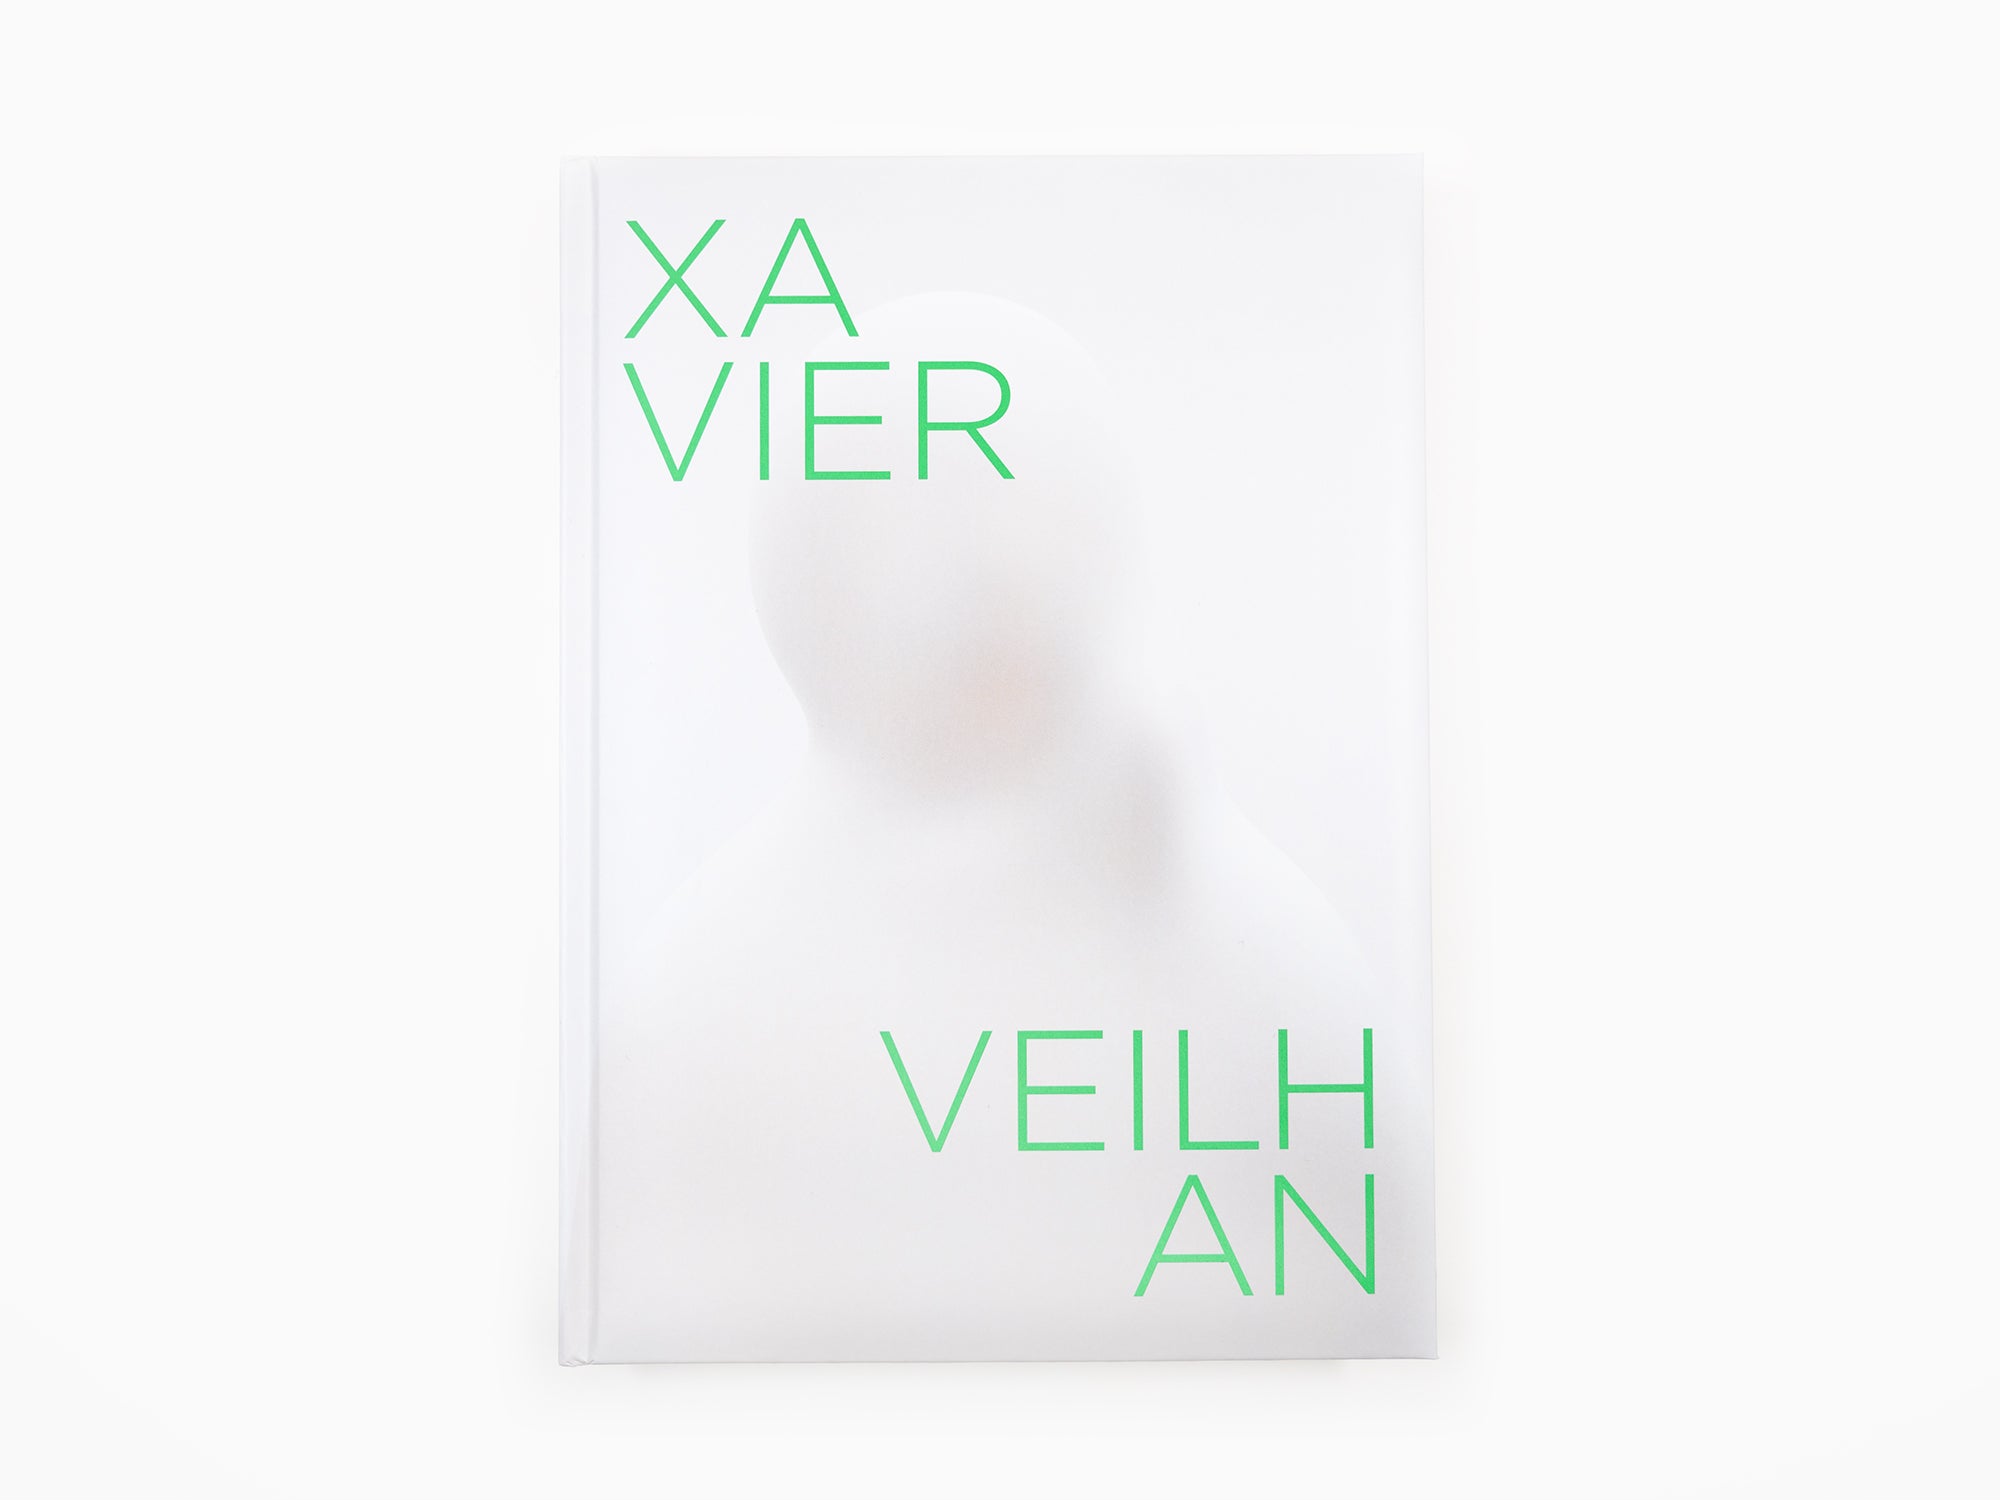 Xavier Veilhan - Perrotin monograph (2023)